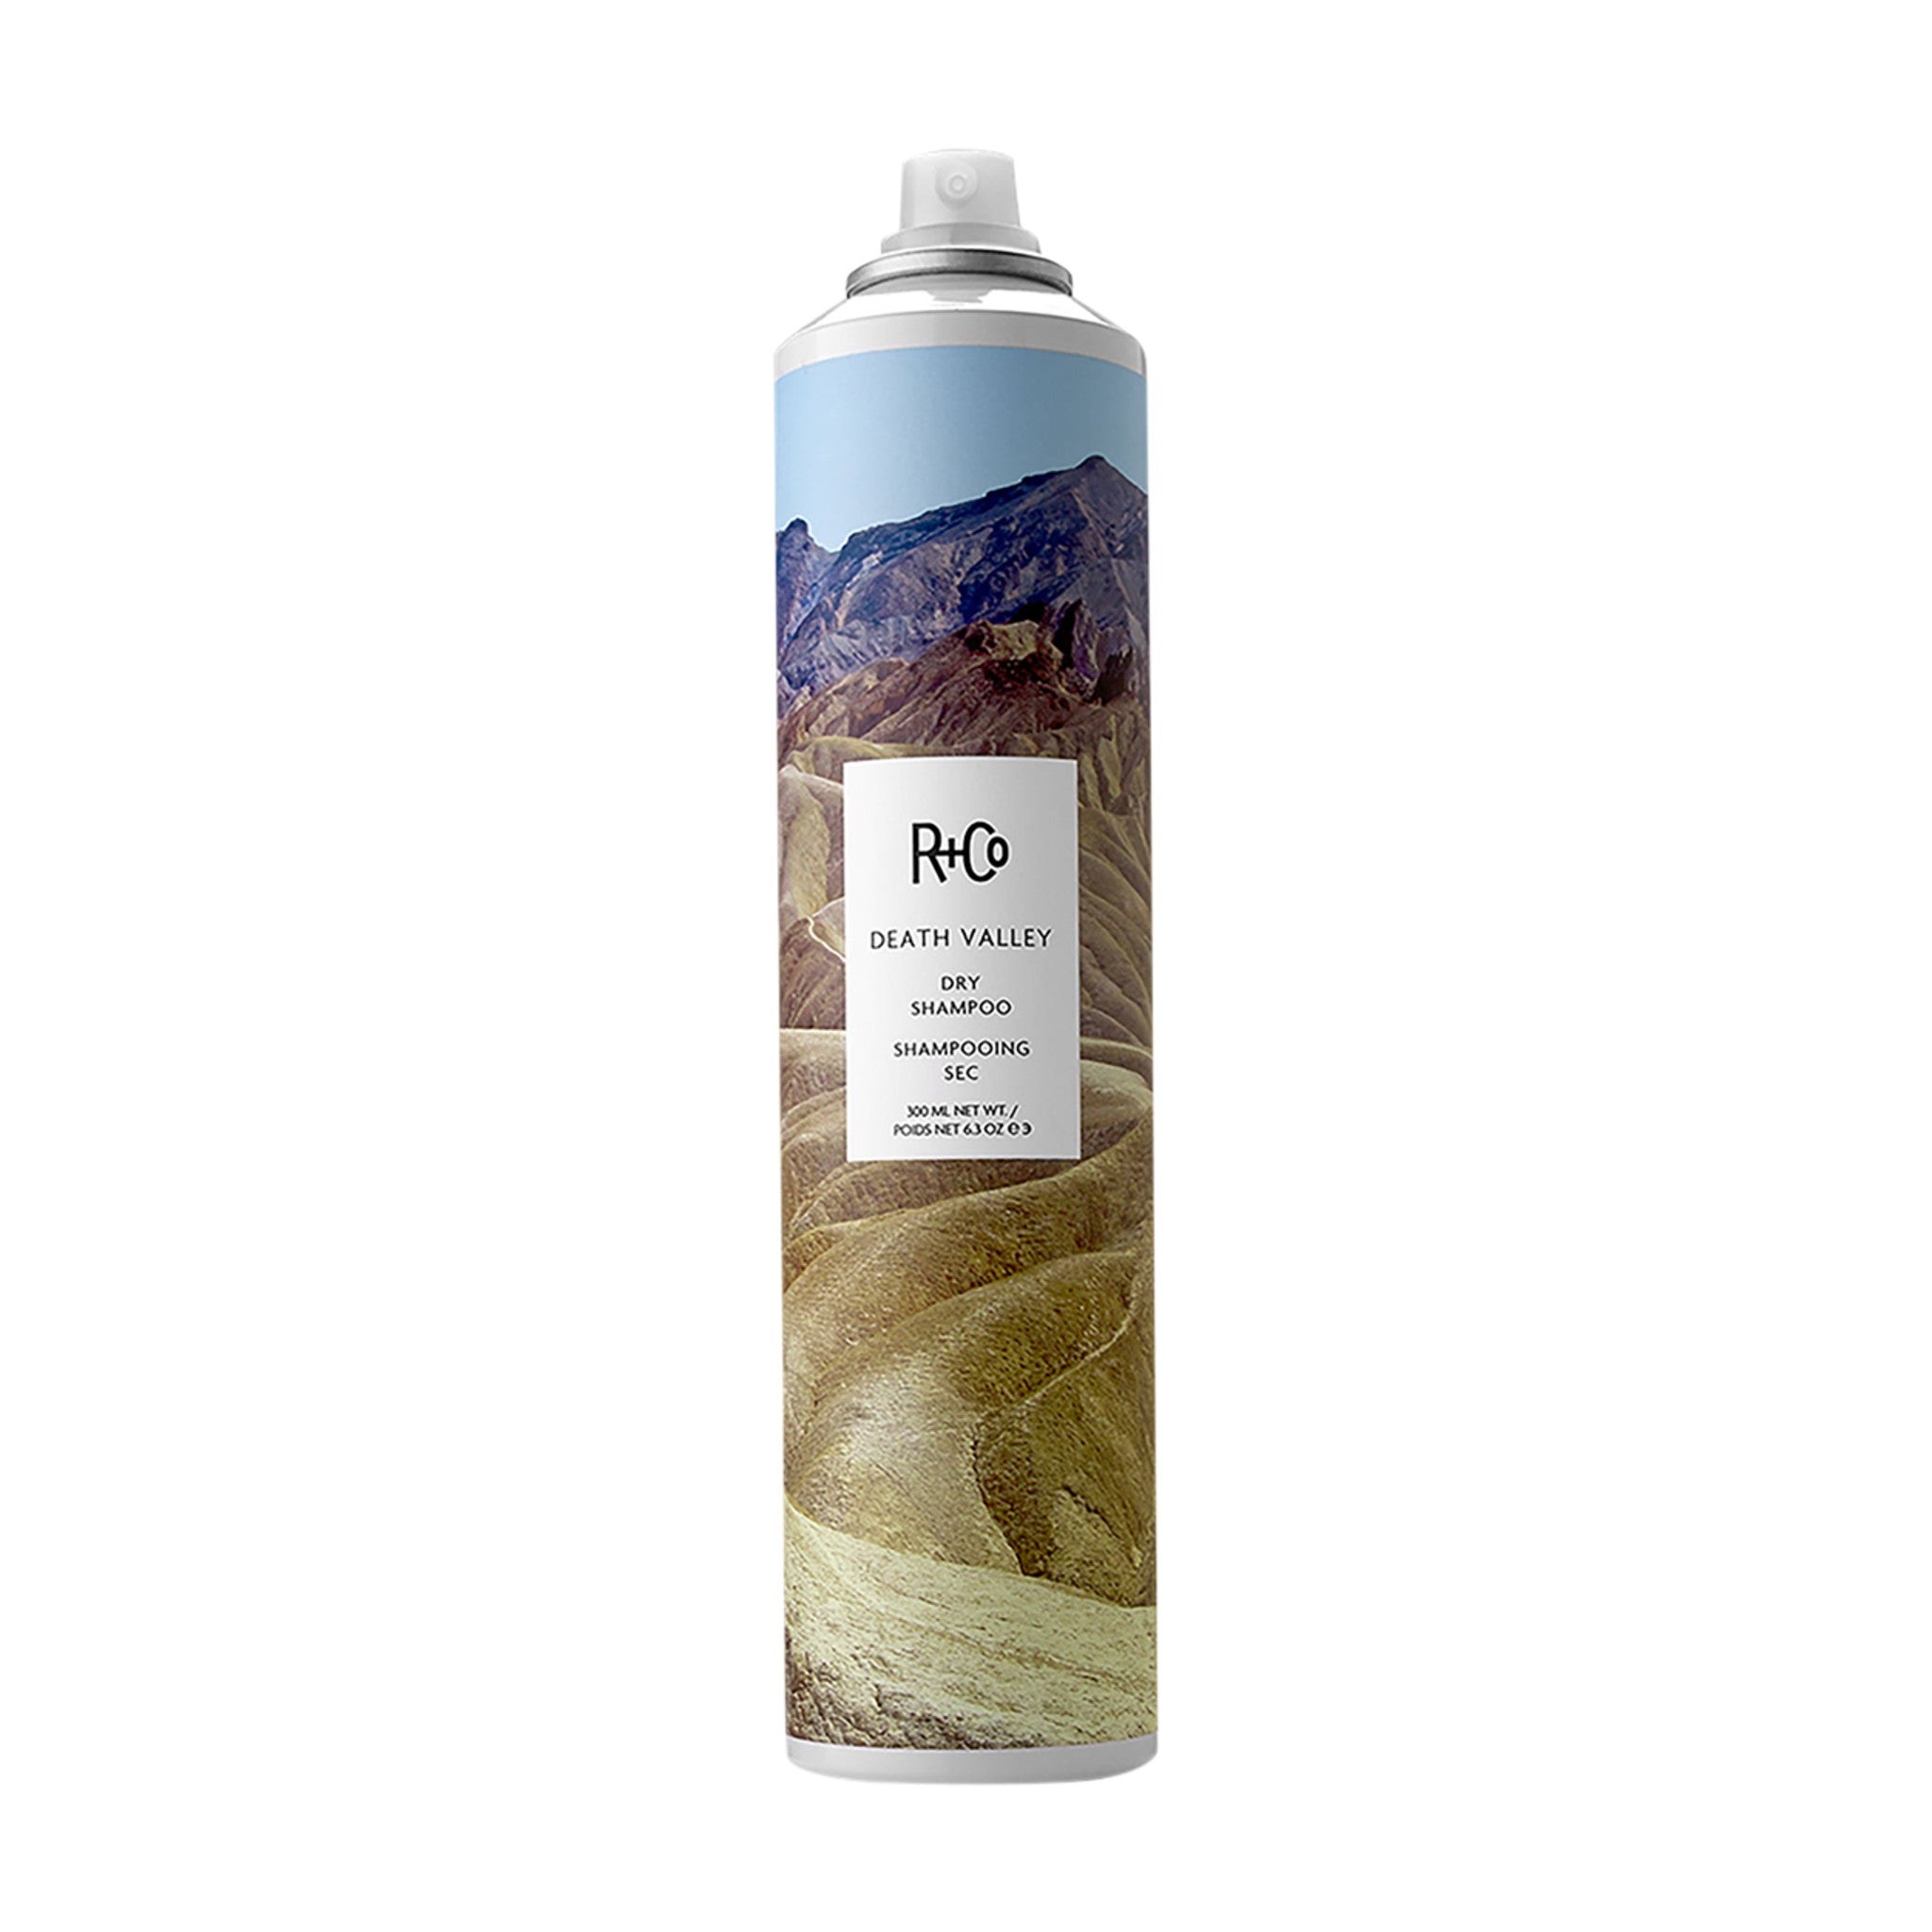 R+Co Death Valley Dry Shampoo Size variant: 6.3 oz | 300 ml main image.